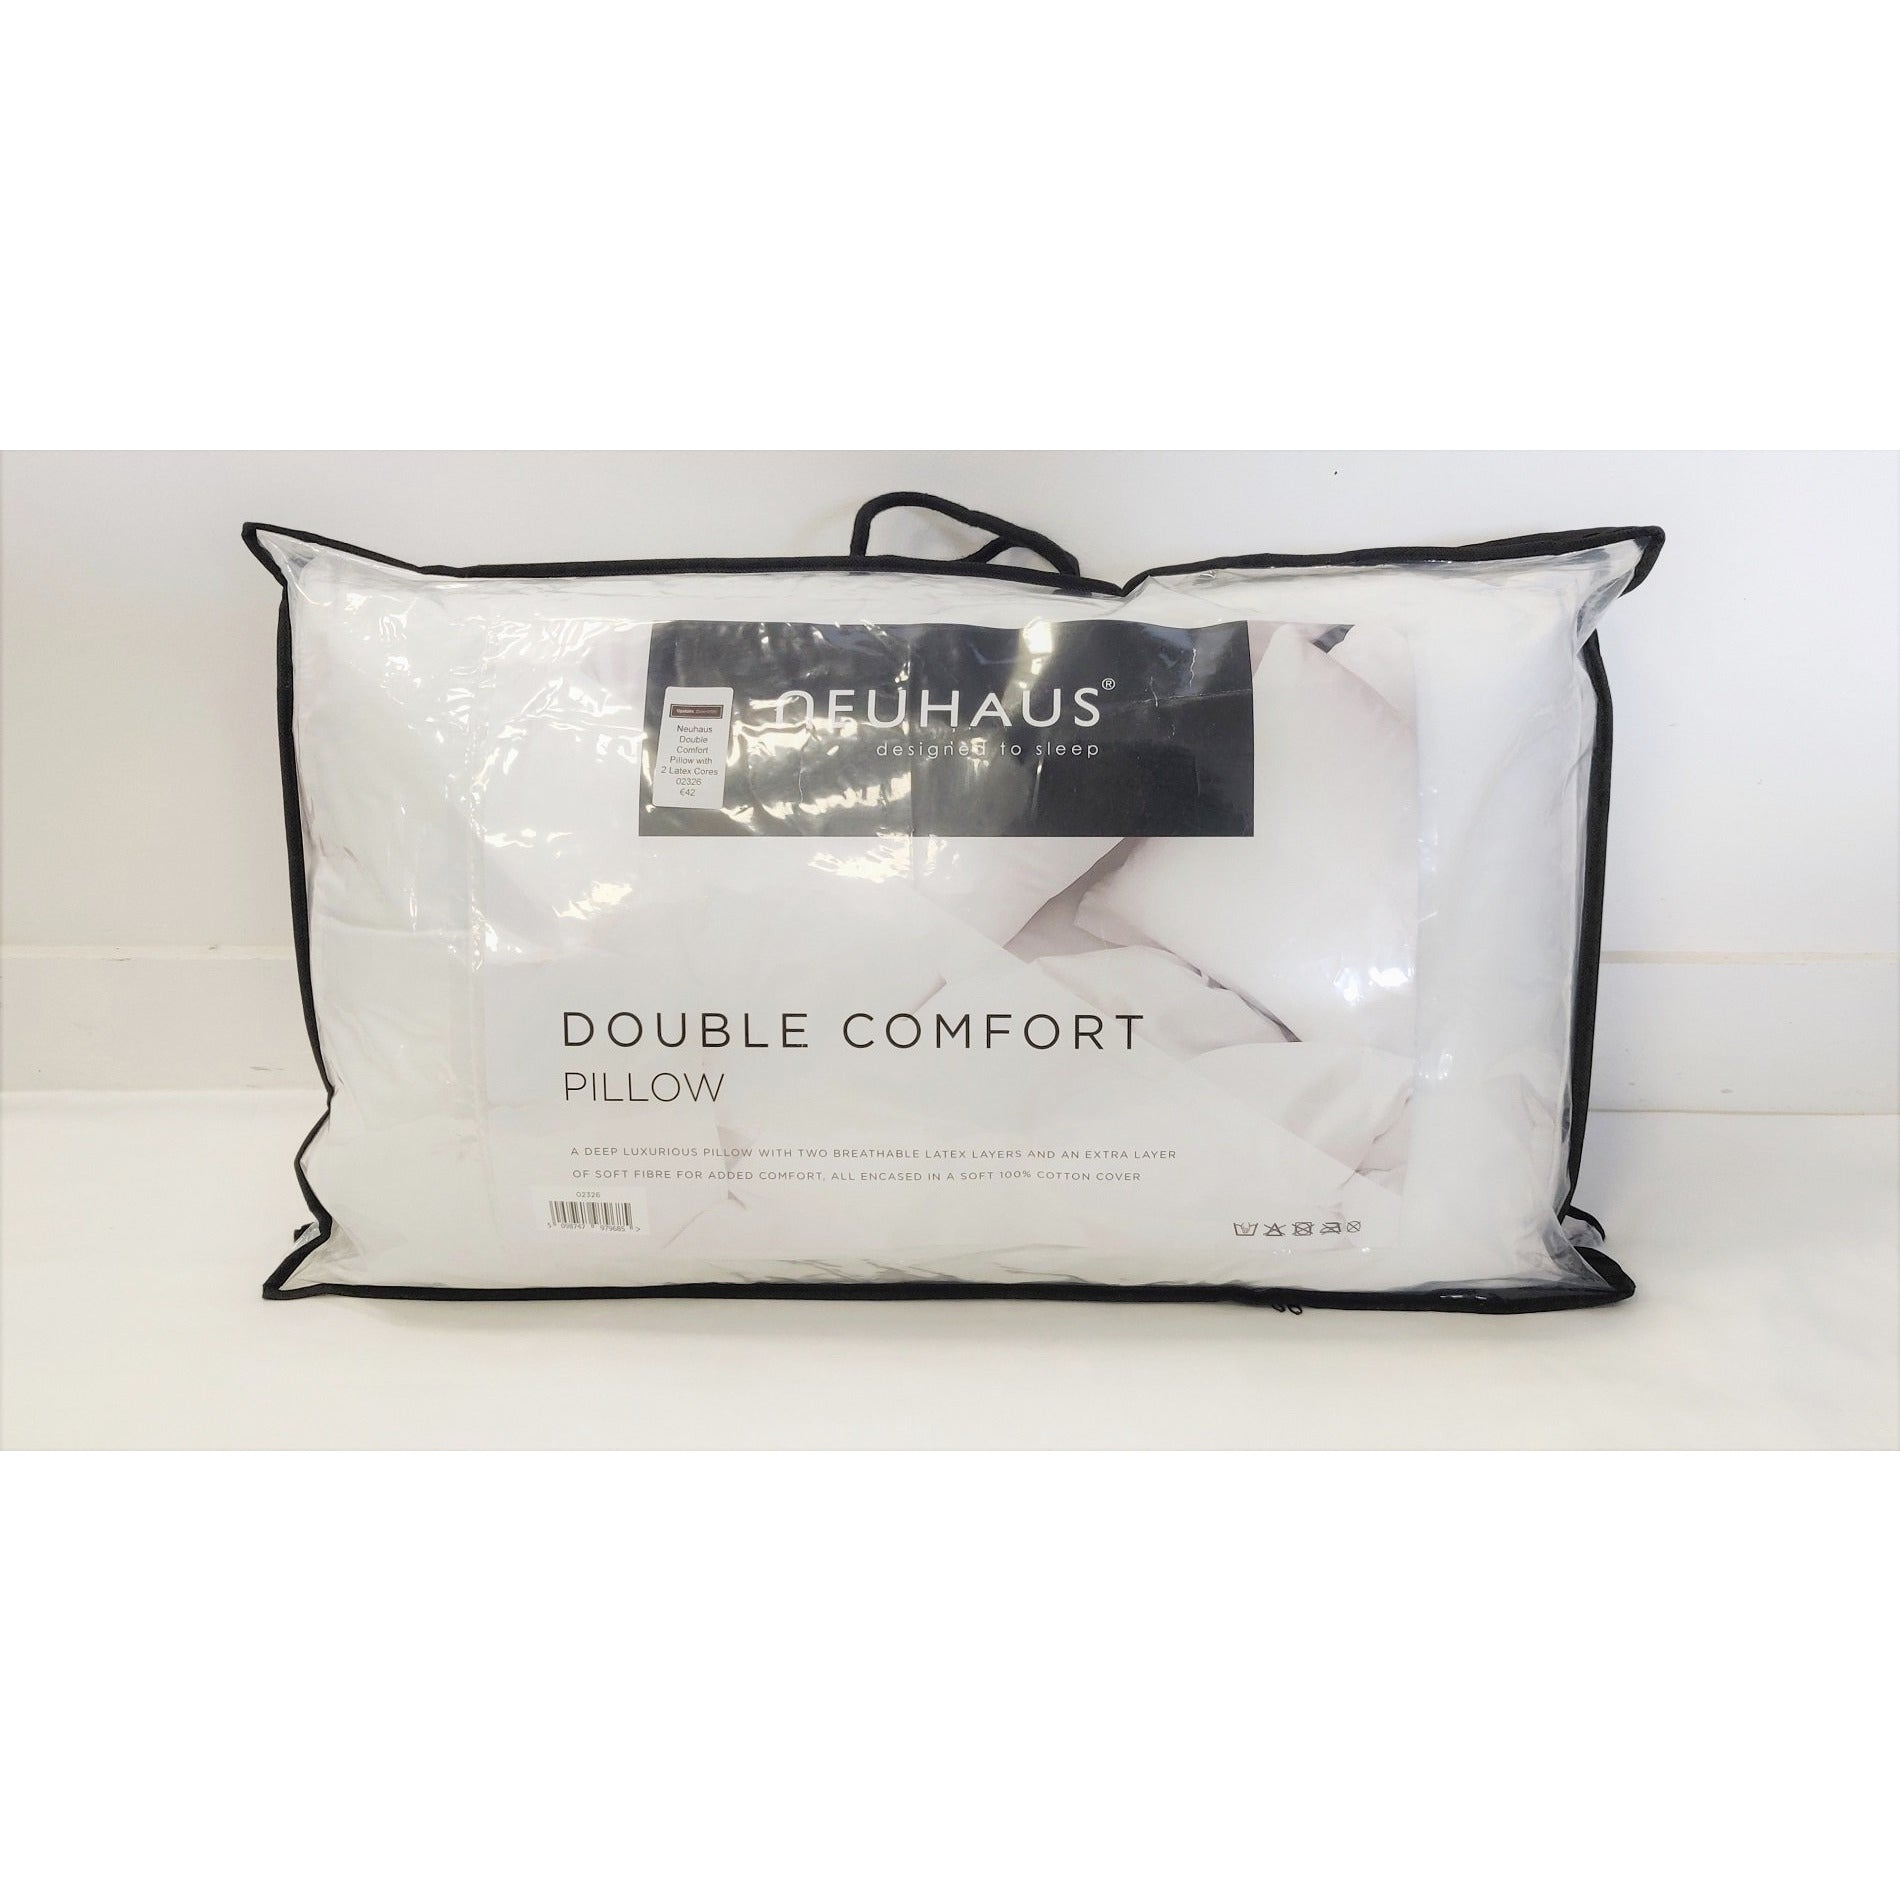 Neuhaus Double Comfort Pillow